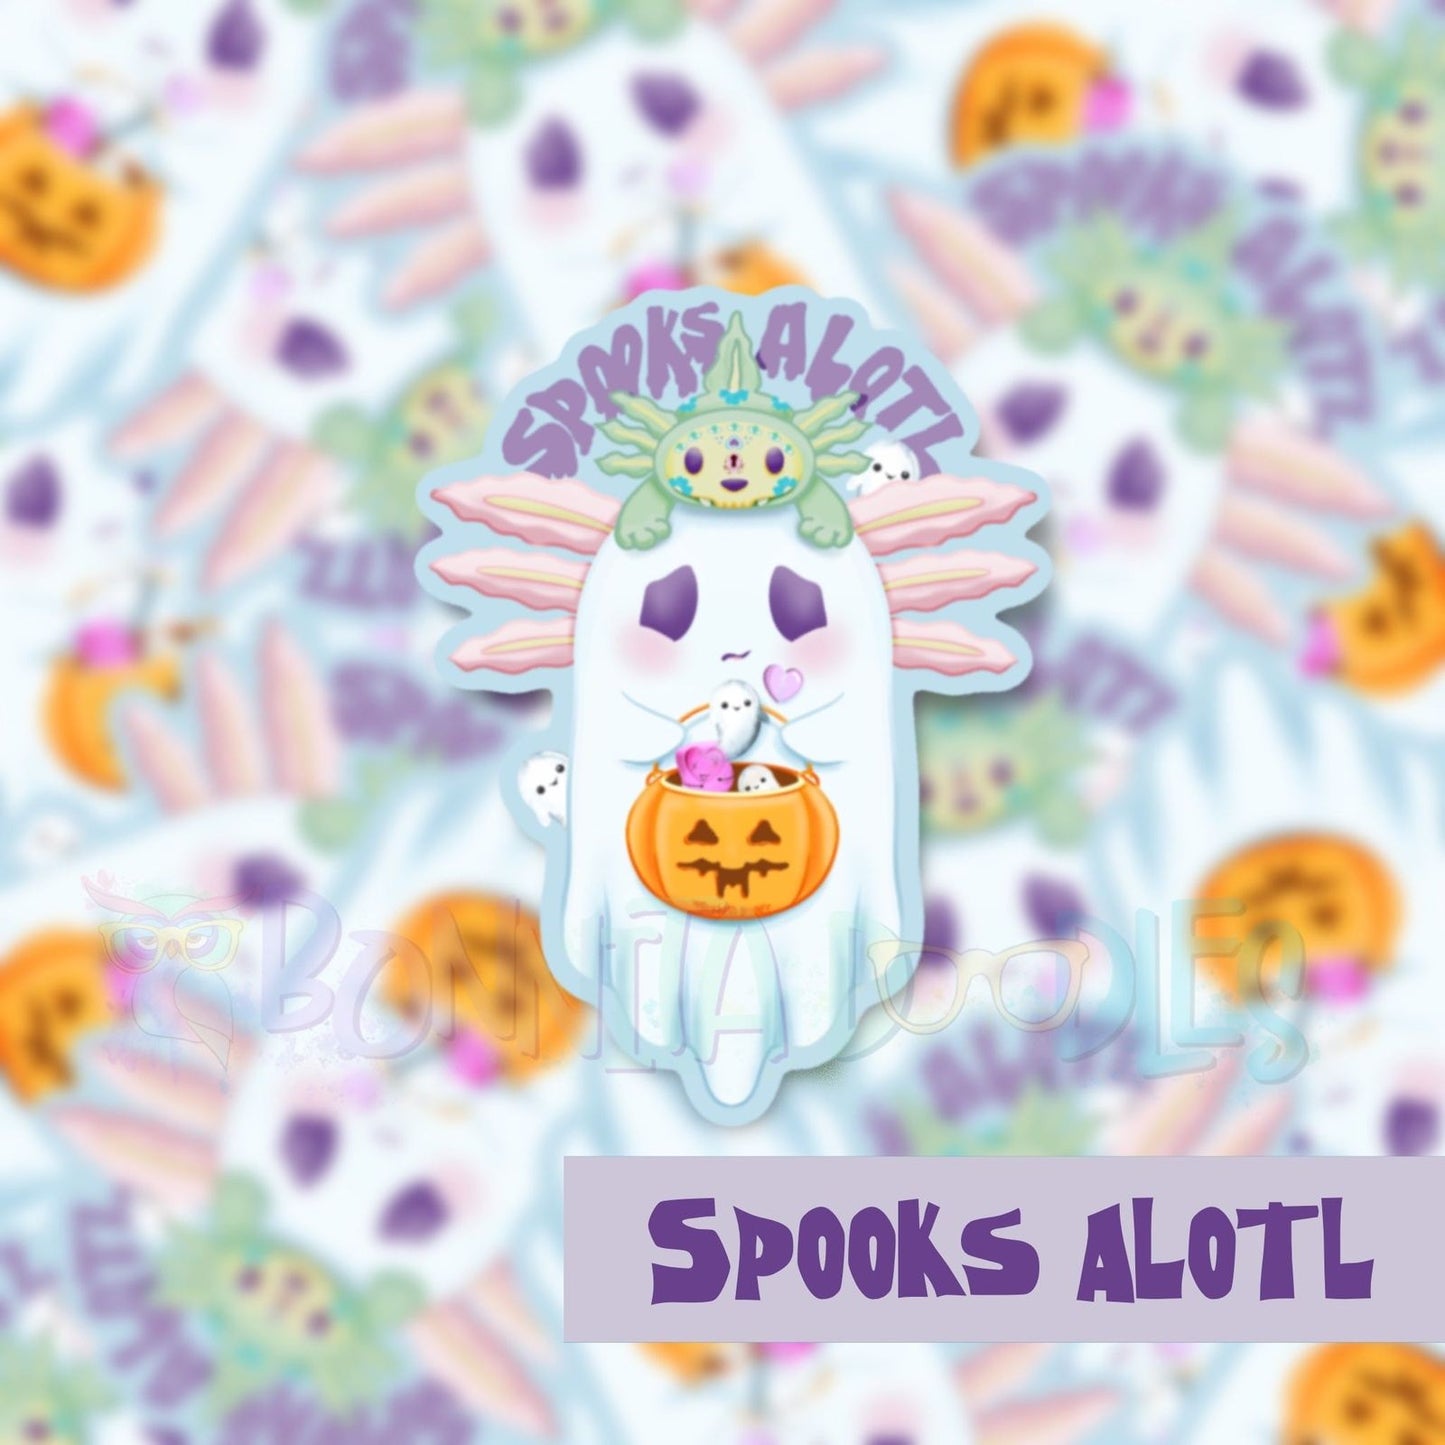 Spooks Alotl - trick or treat vinyl sticker / print